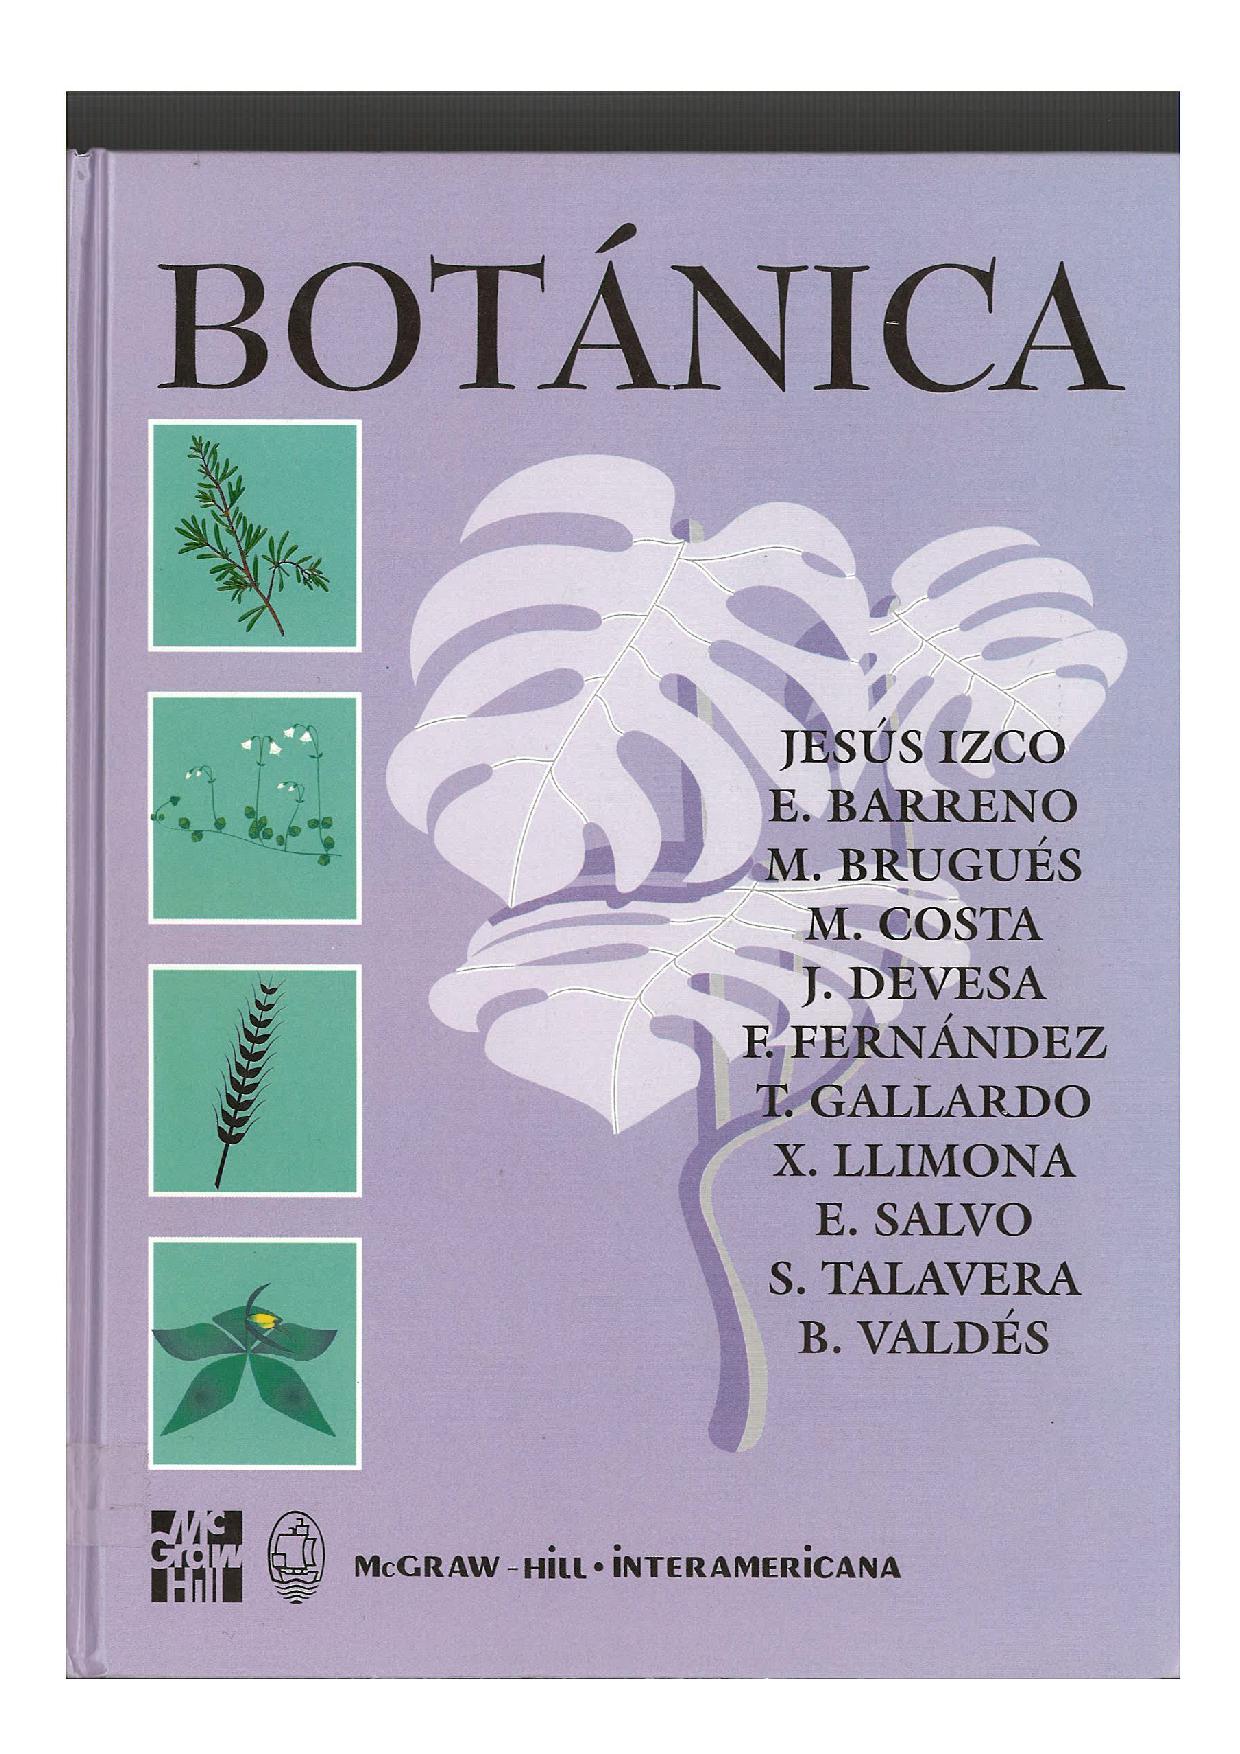 Imagen de portada del libro Botánica